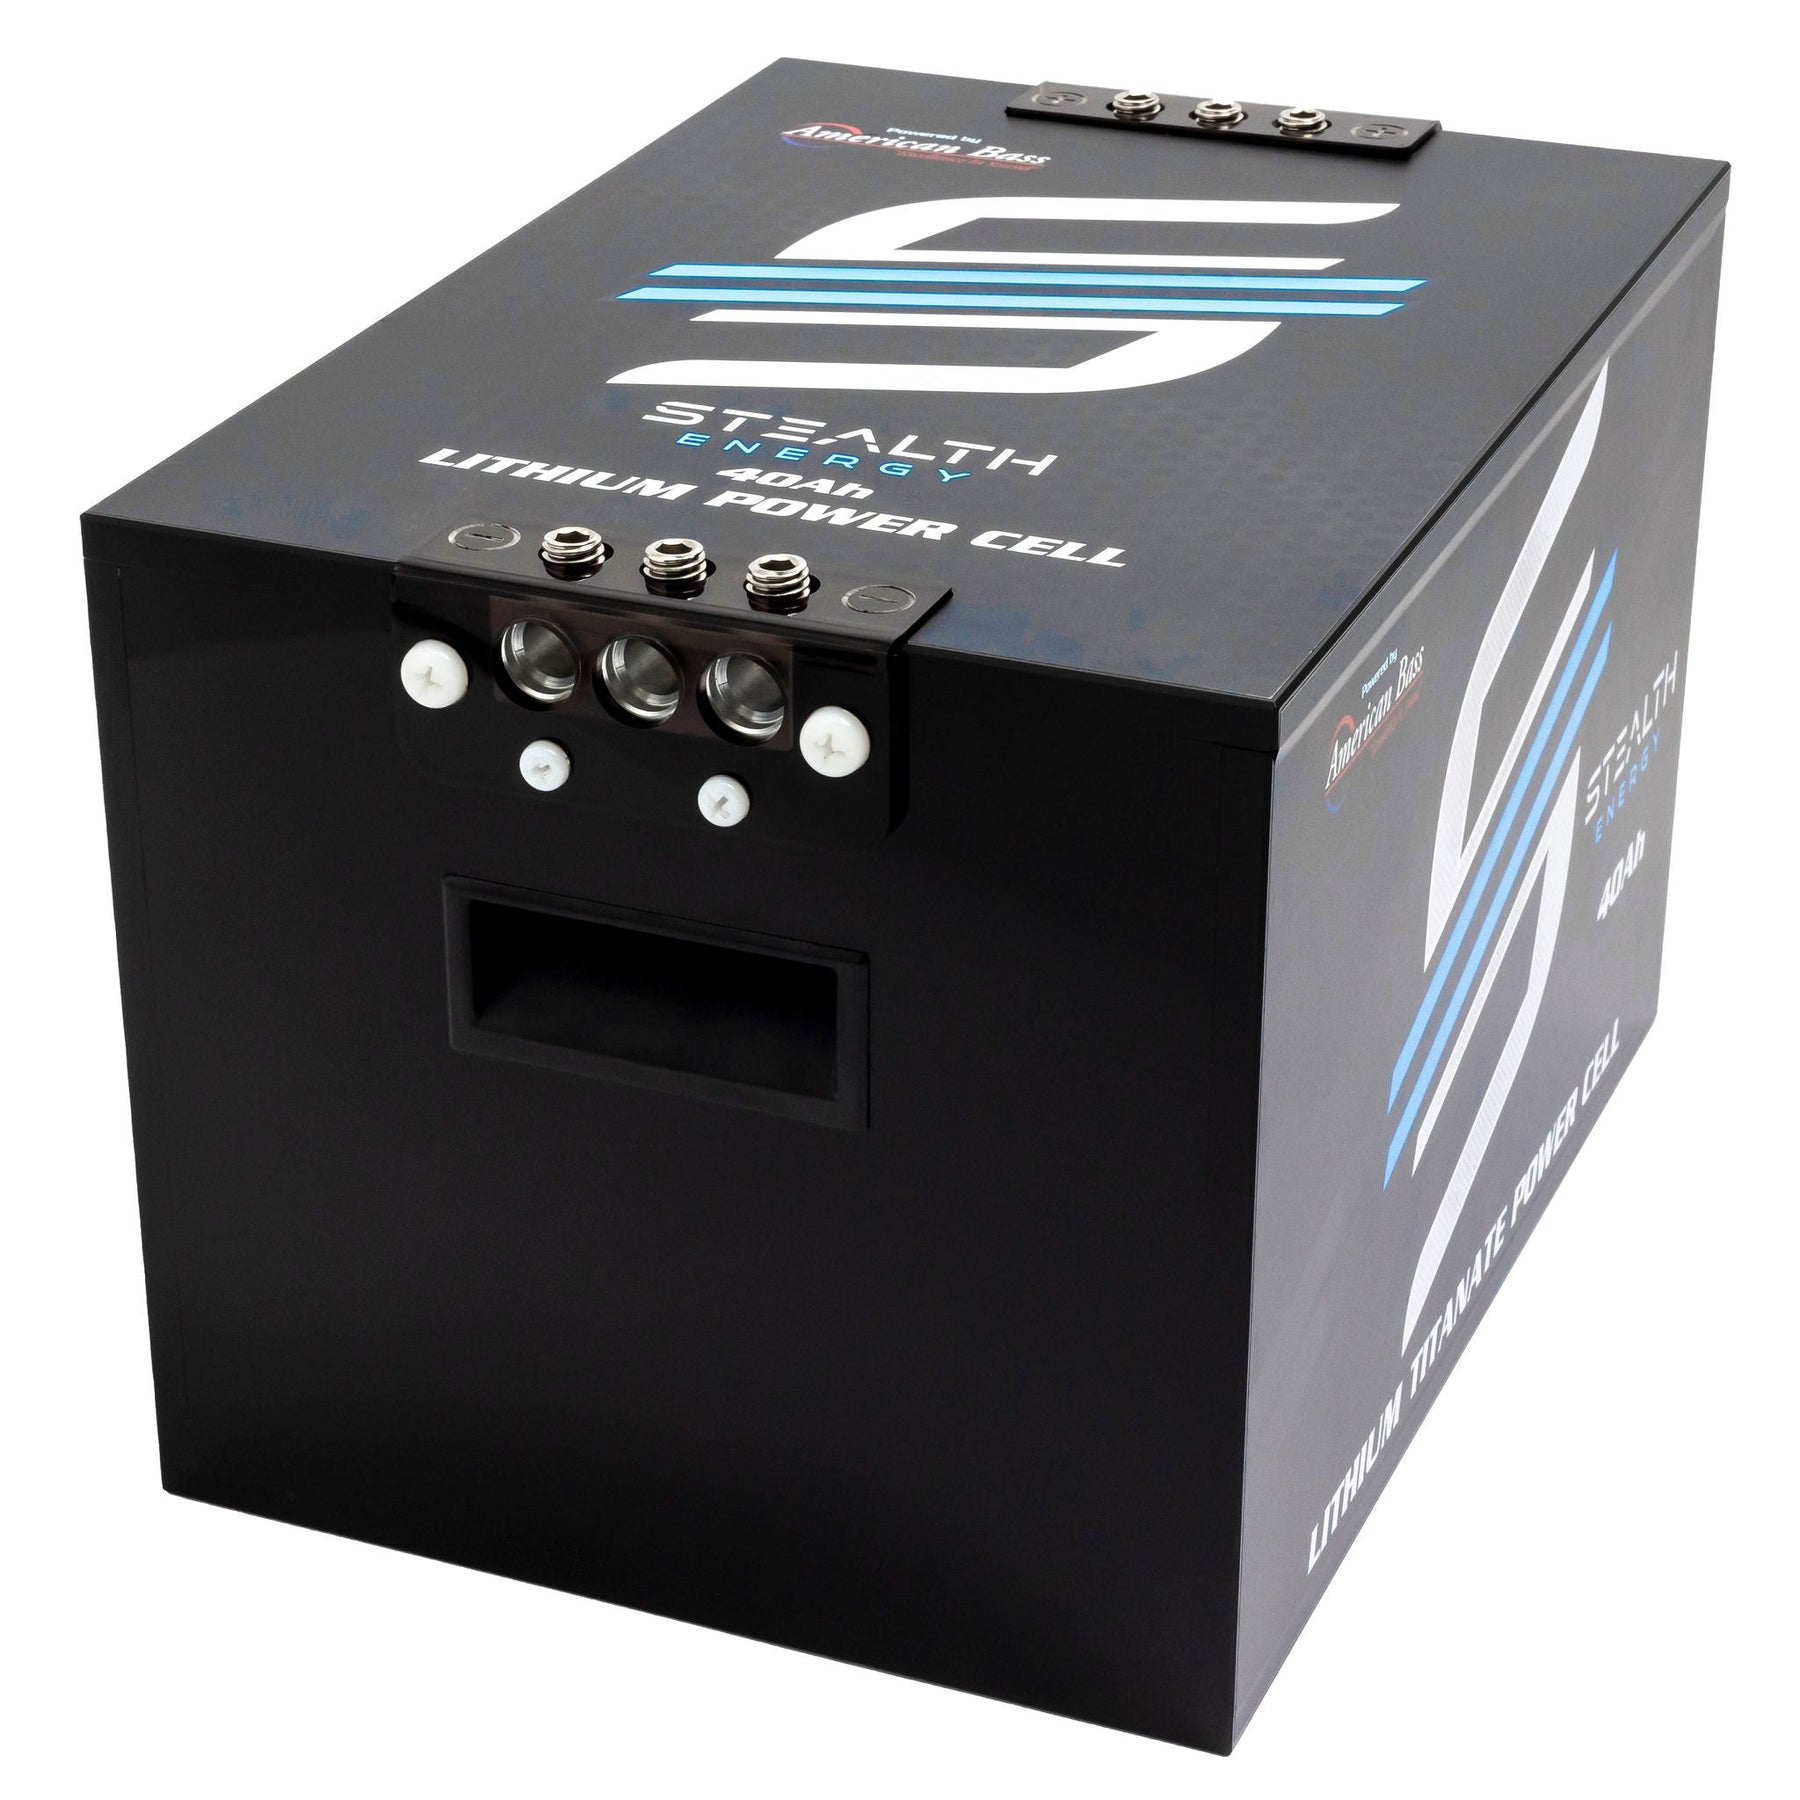 Lithium Titanate Battery 13.8V 40Ah - American Bass Audio